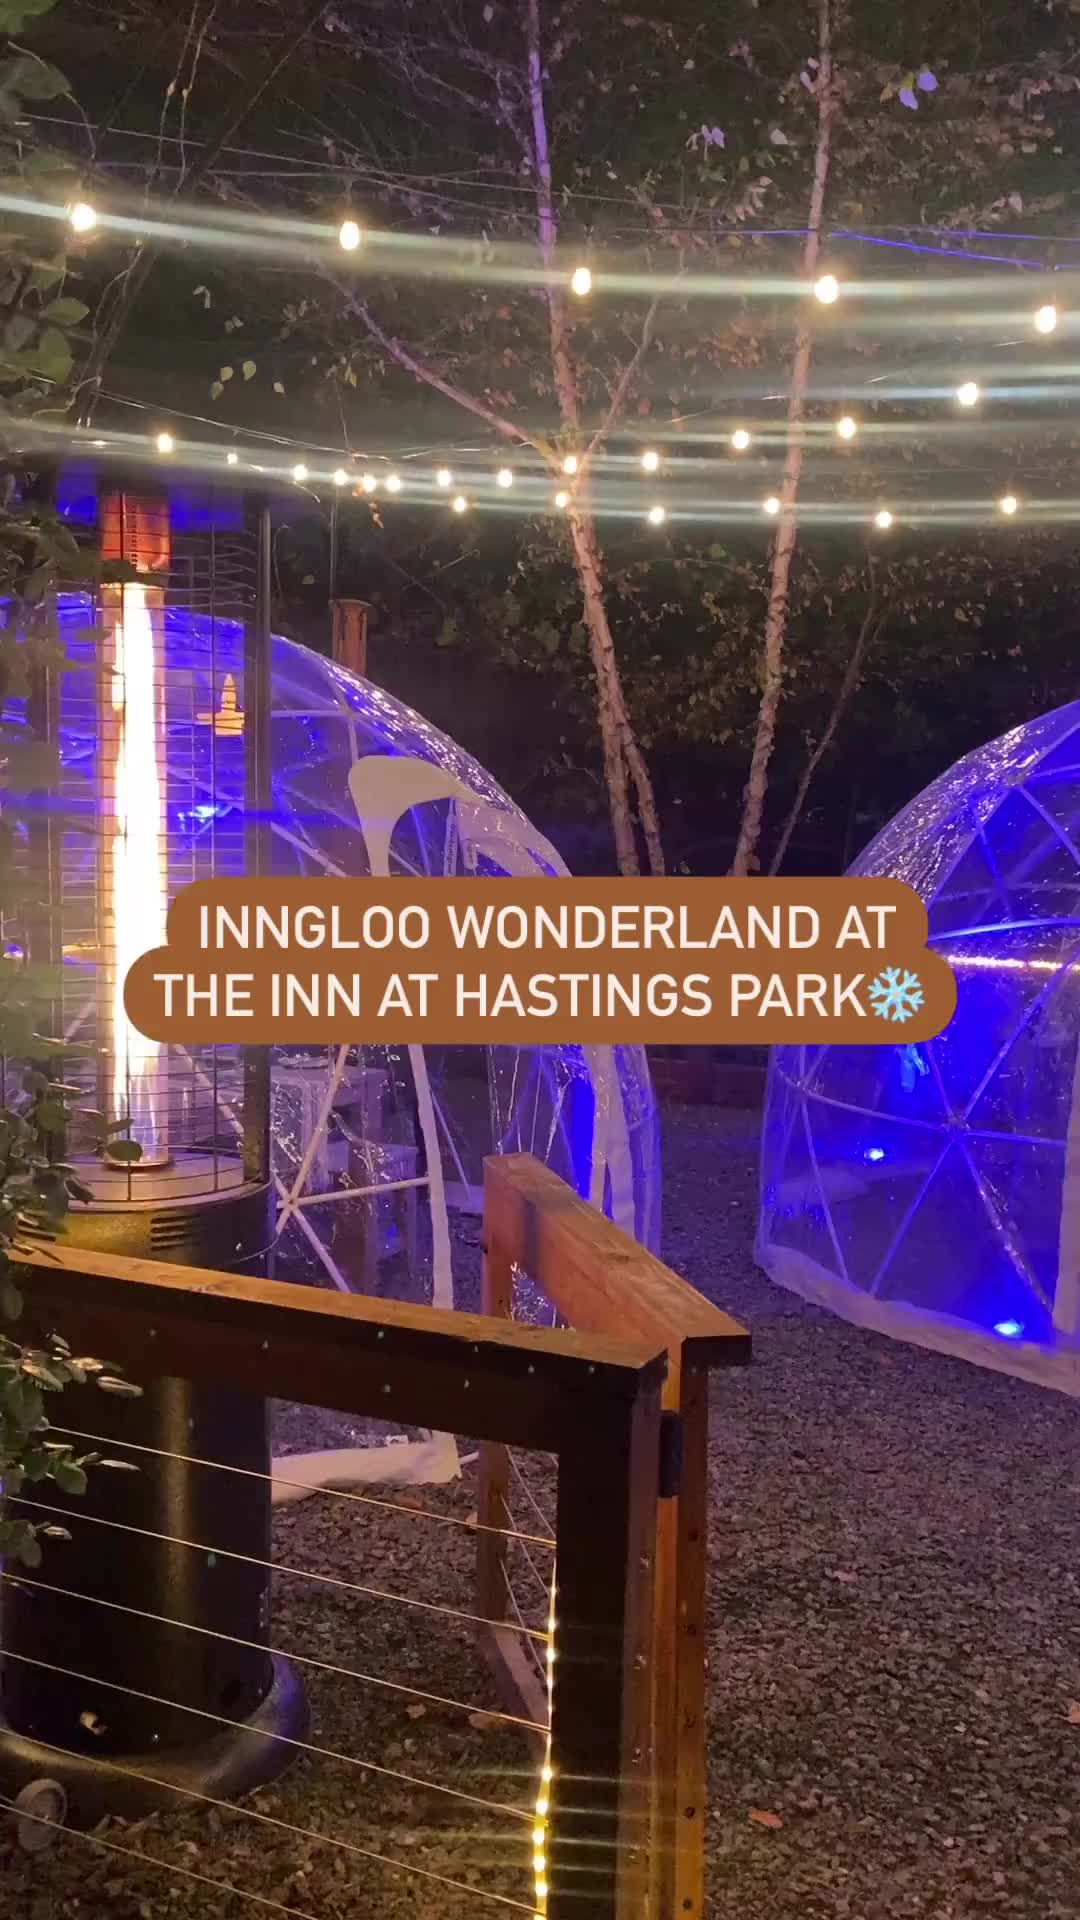 Experience INNgloo Wonderland at Inn at Hastings Park